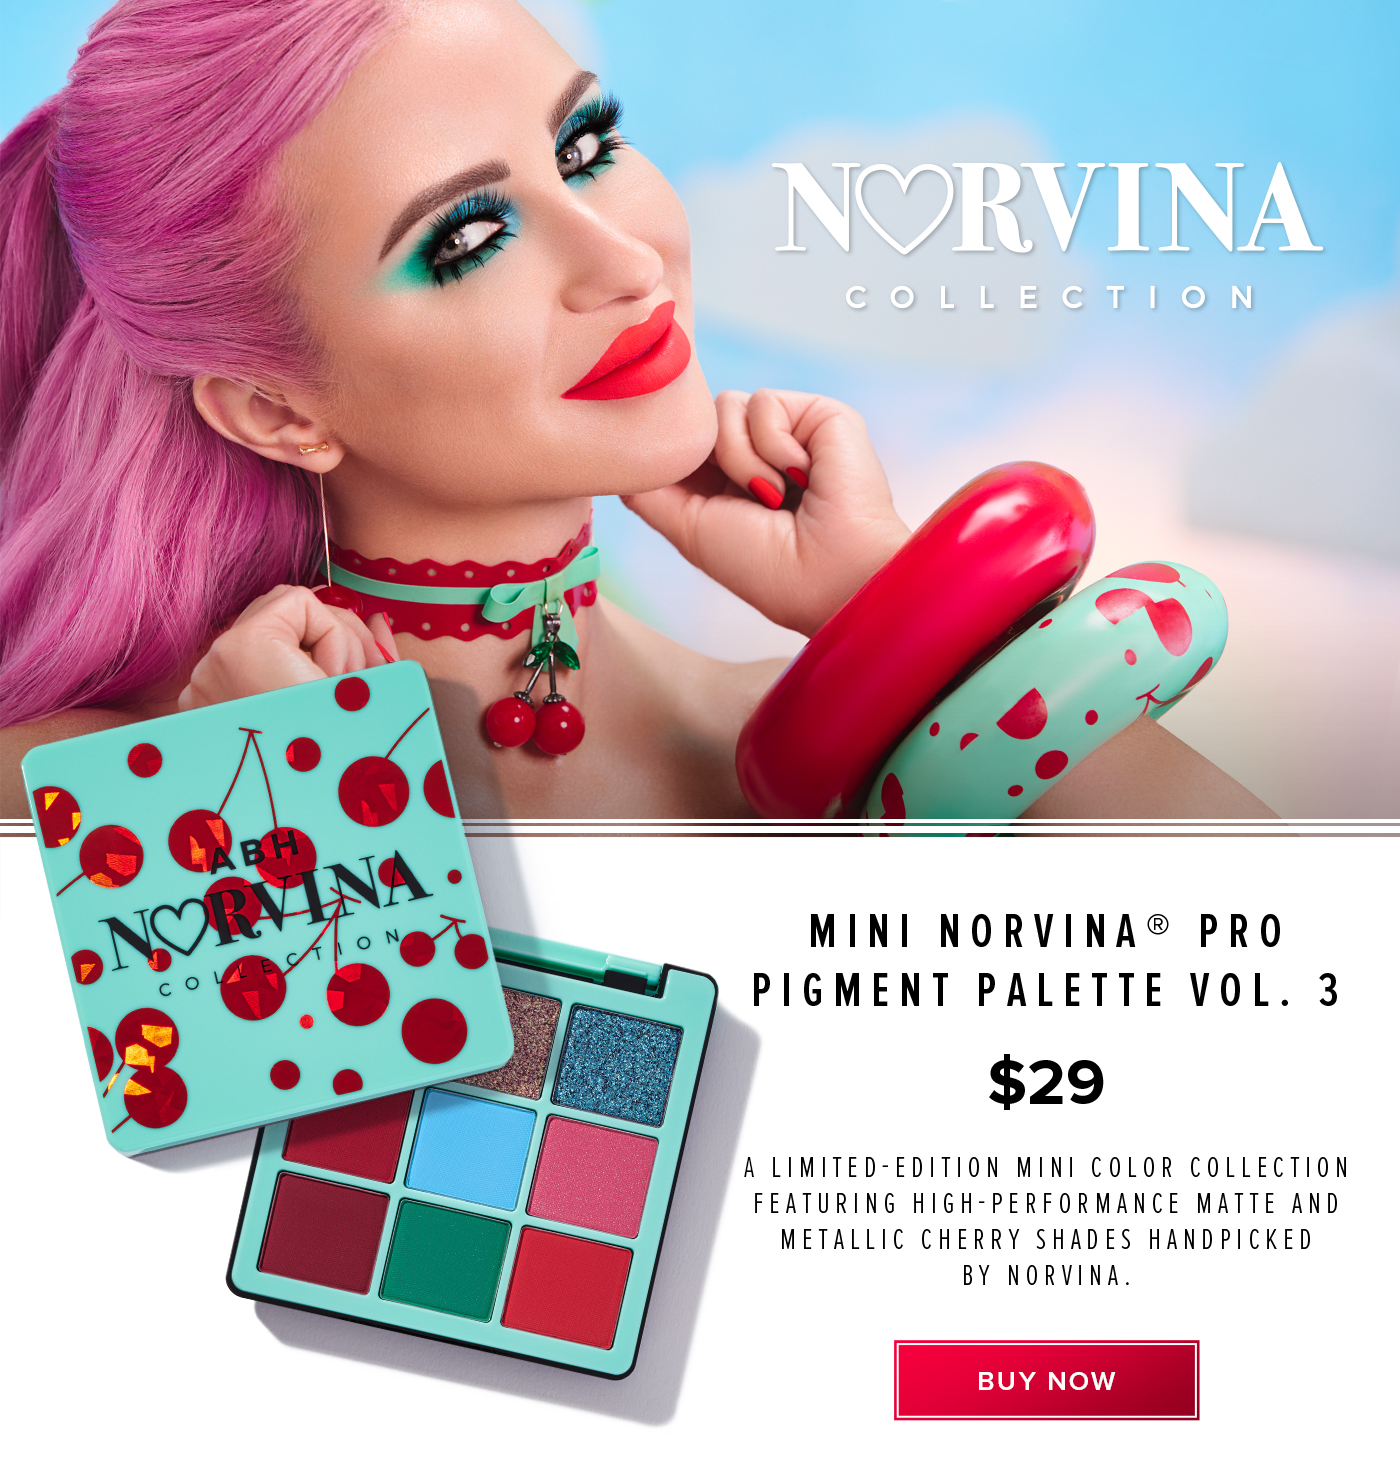 Mini Norvina Pro Pigment Palette Vol. 3 $29